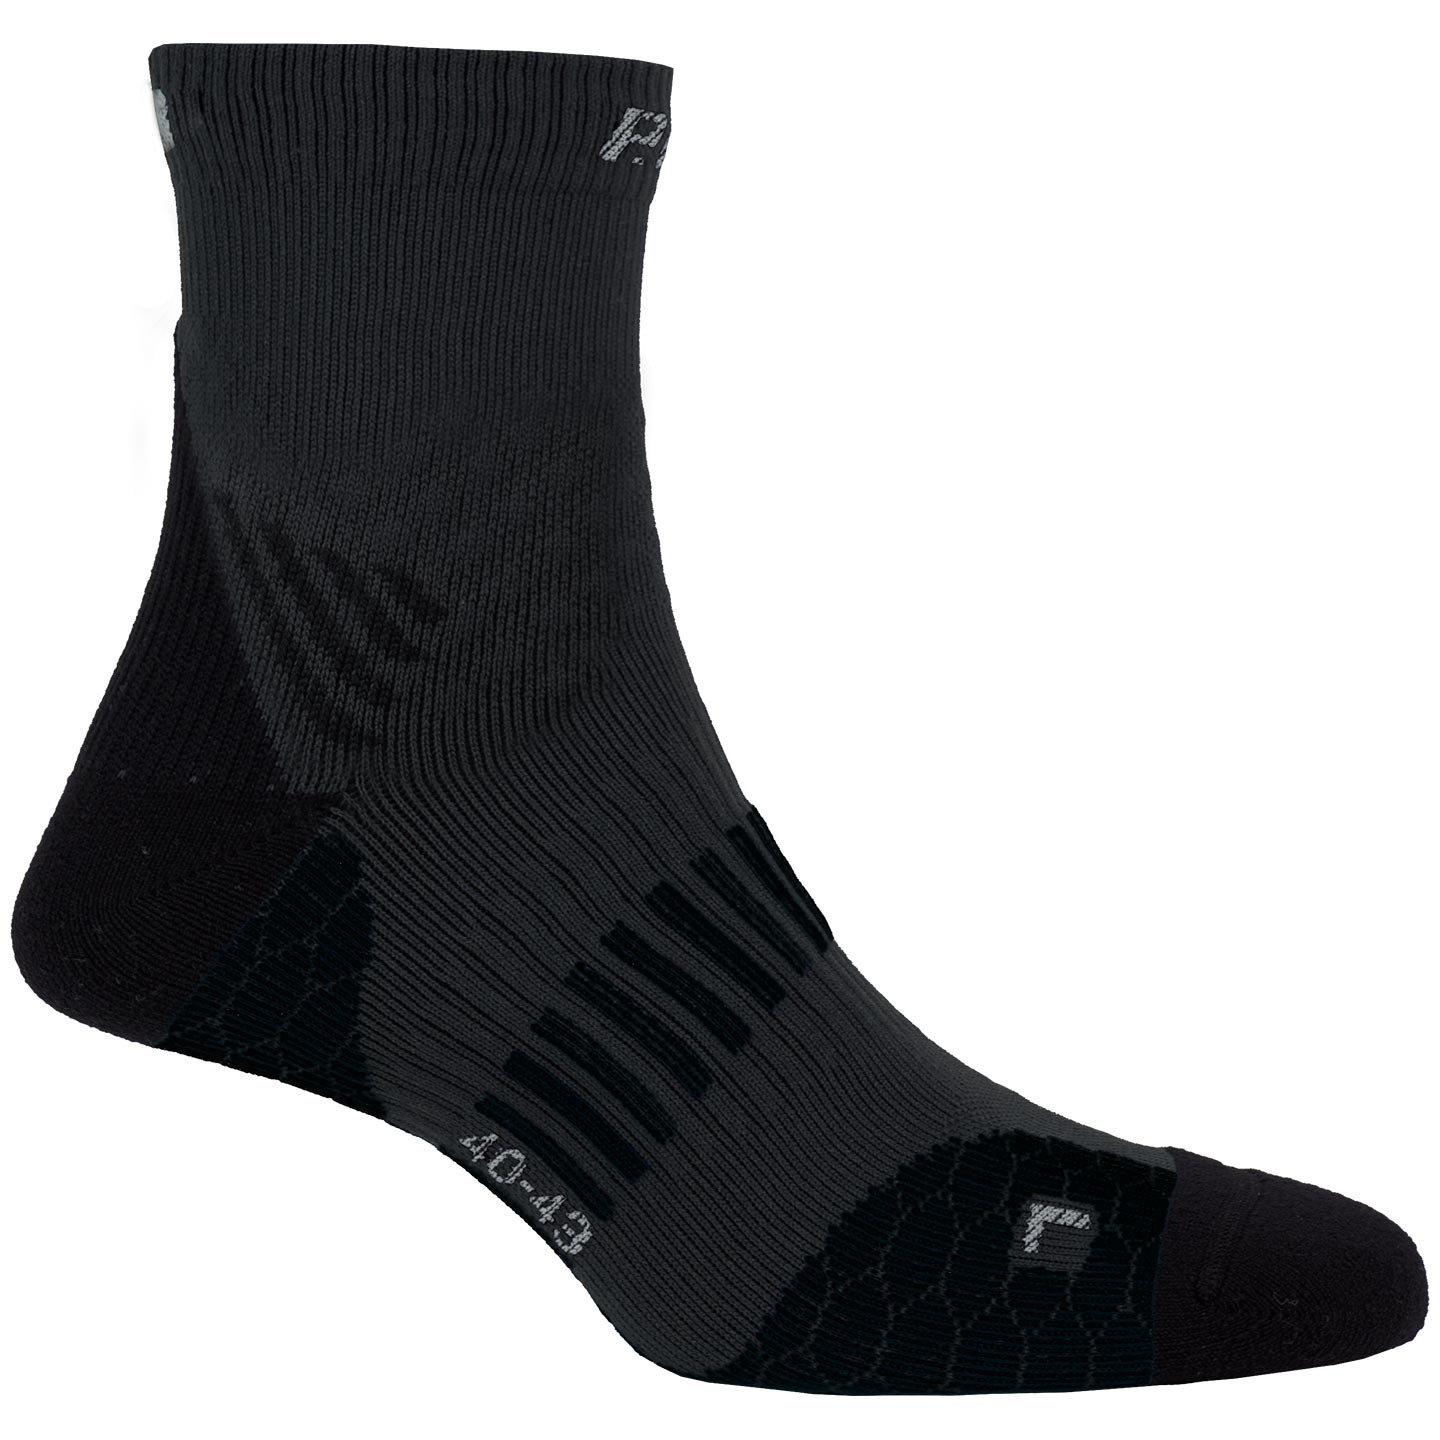 P.A.C BK 3.2 Reflective Cycling Socks Cycling Socks, for men, size L, MTB socks, Cycle gear